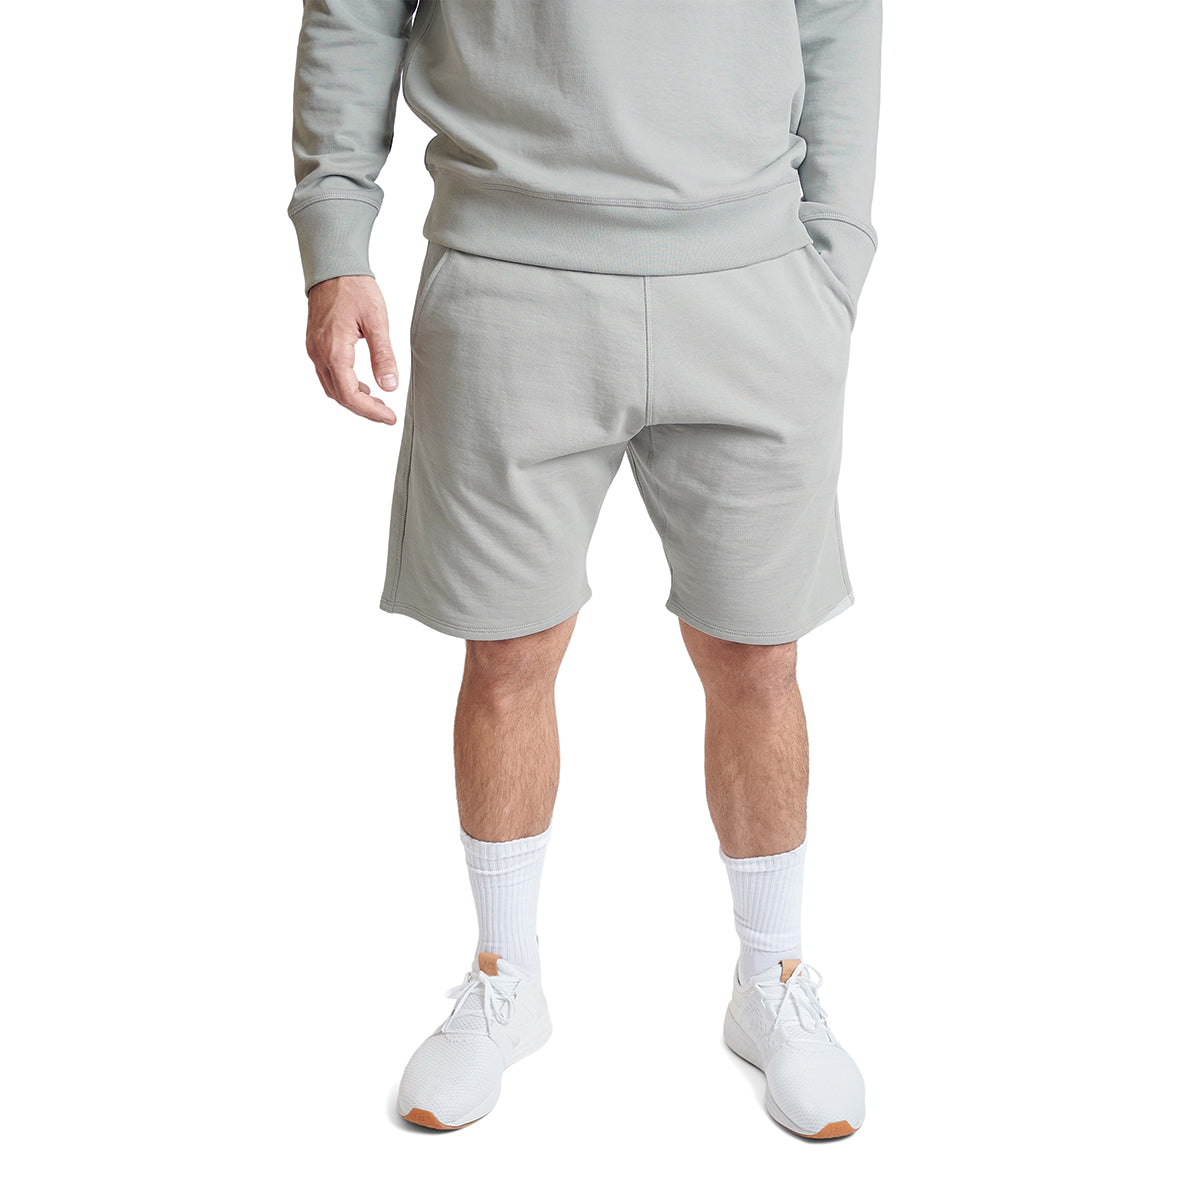 NBD Premium Collection Sweat Shorts-Shorts-Spittin Chiclets-Grey-S-Barstool Sports